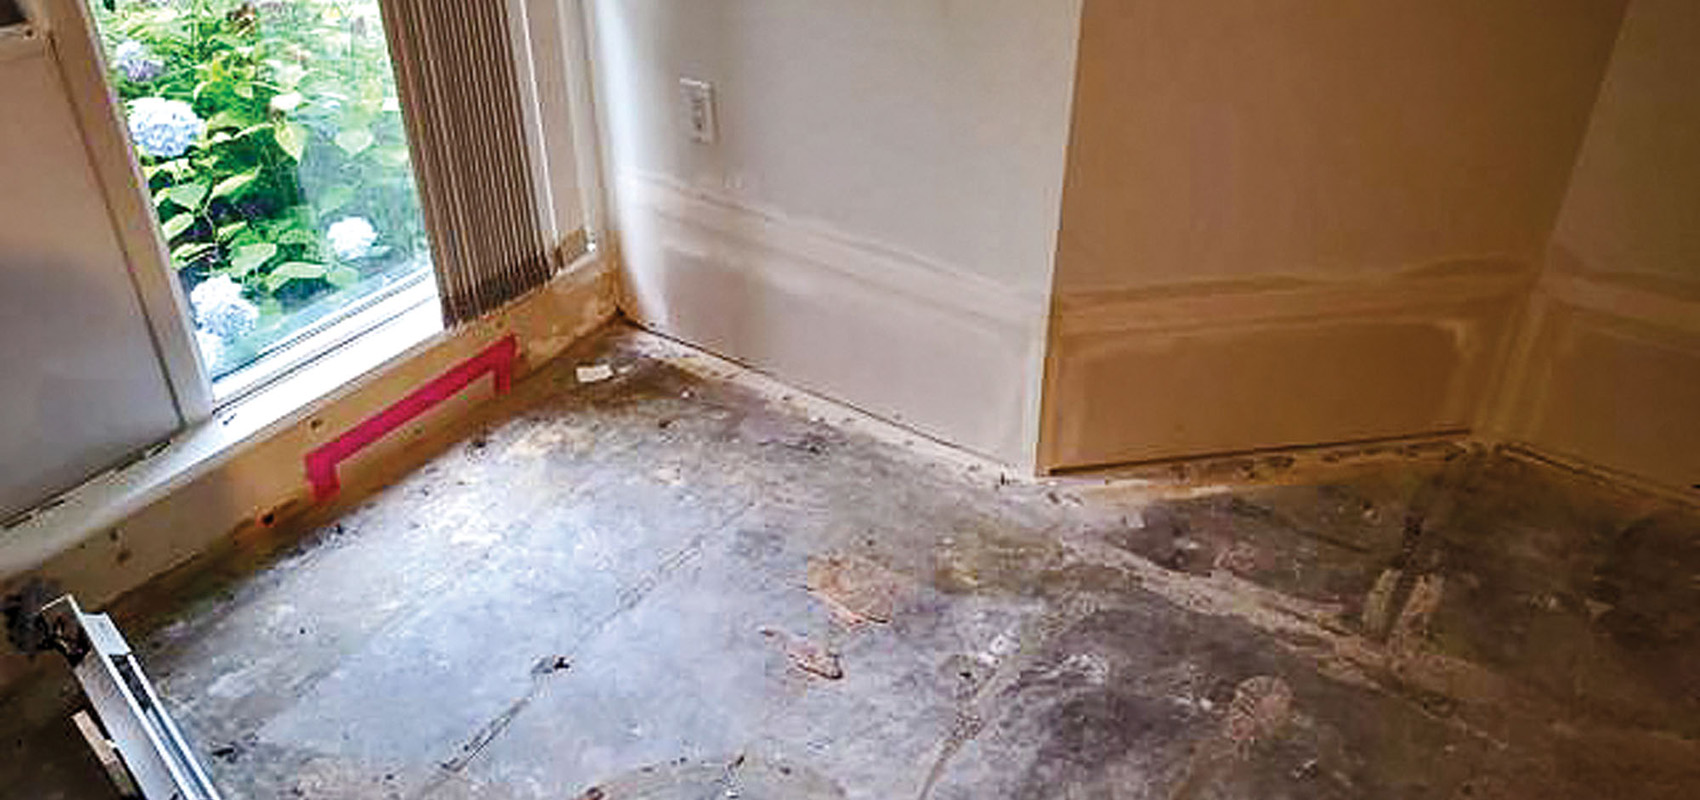 Water-damaged floor removed revealing subfloor